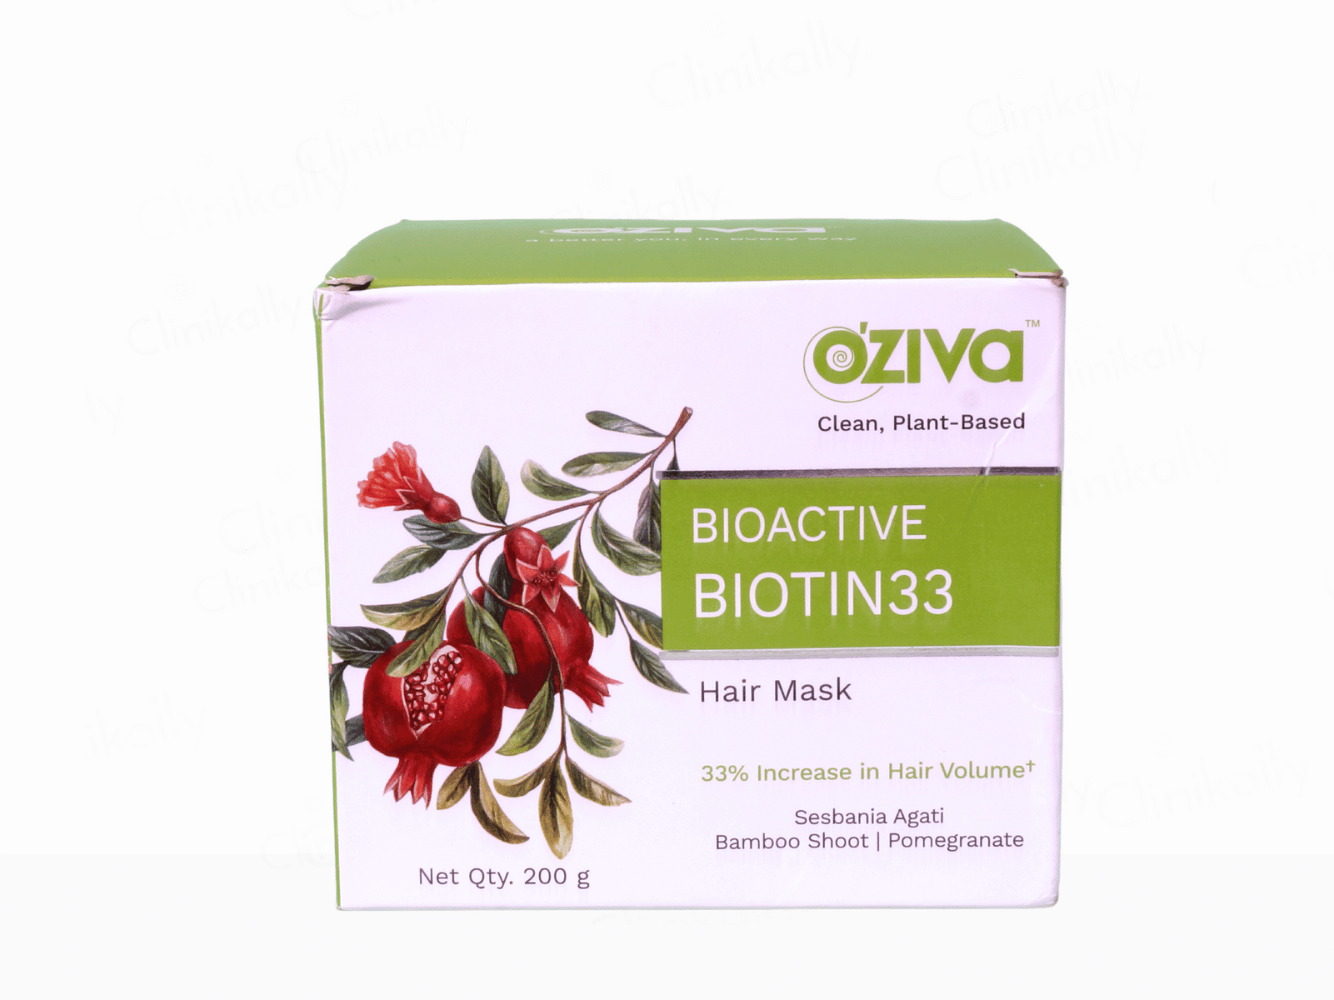 OZiva Bioactive Biotin33 Hair Mask - Clinkally